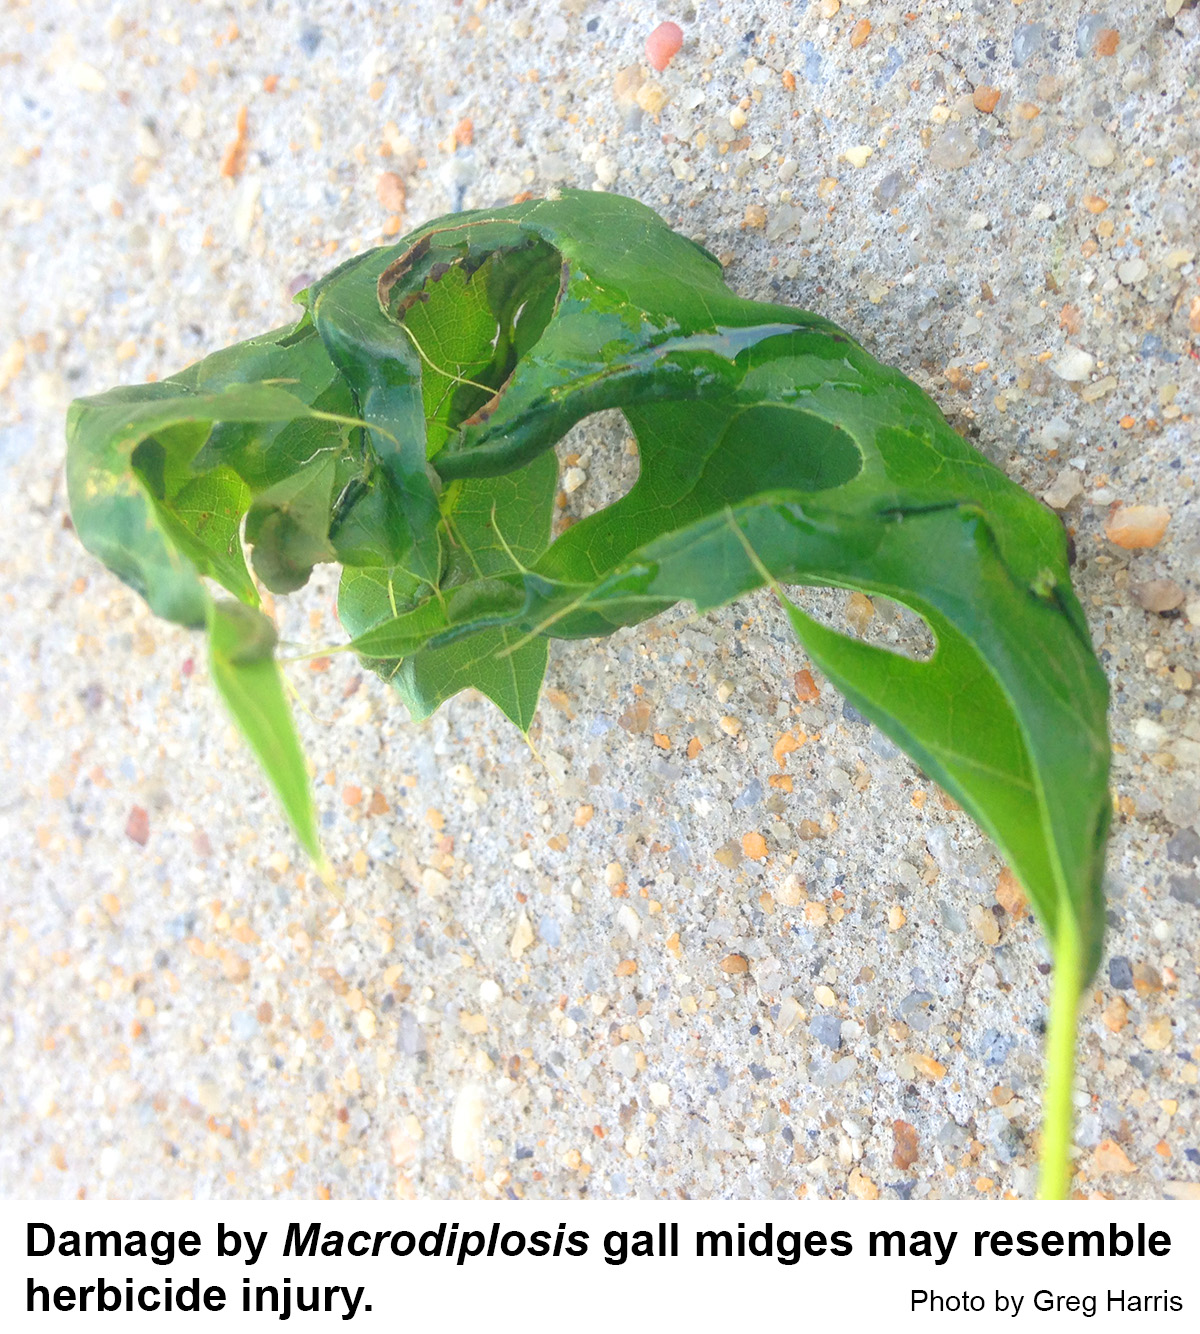 Macrodiplosis gall midge damage may resemble herbicide injury.